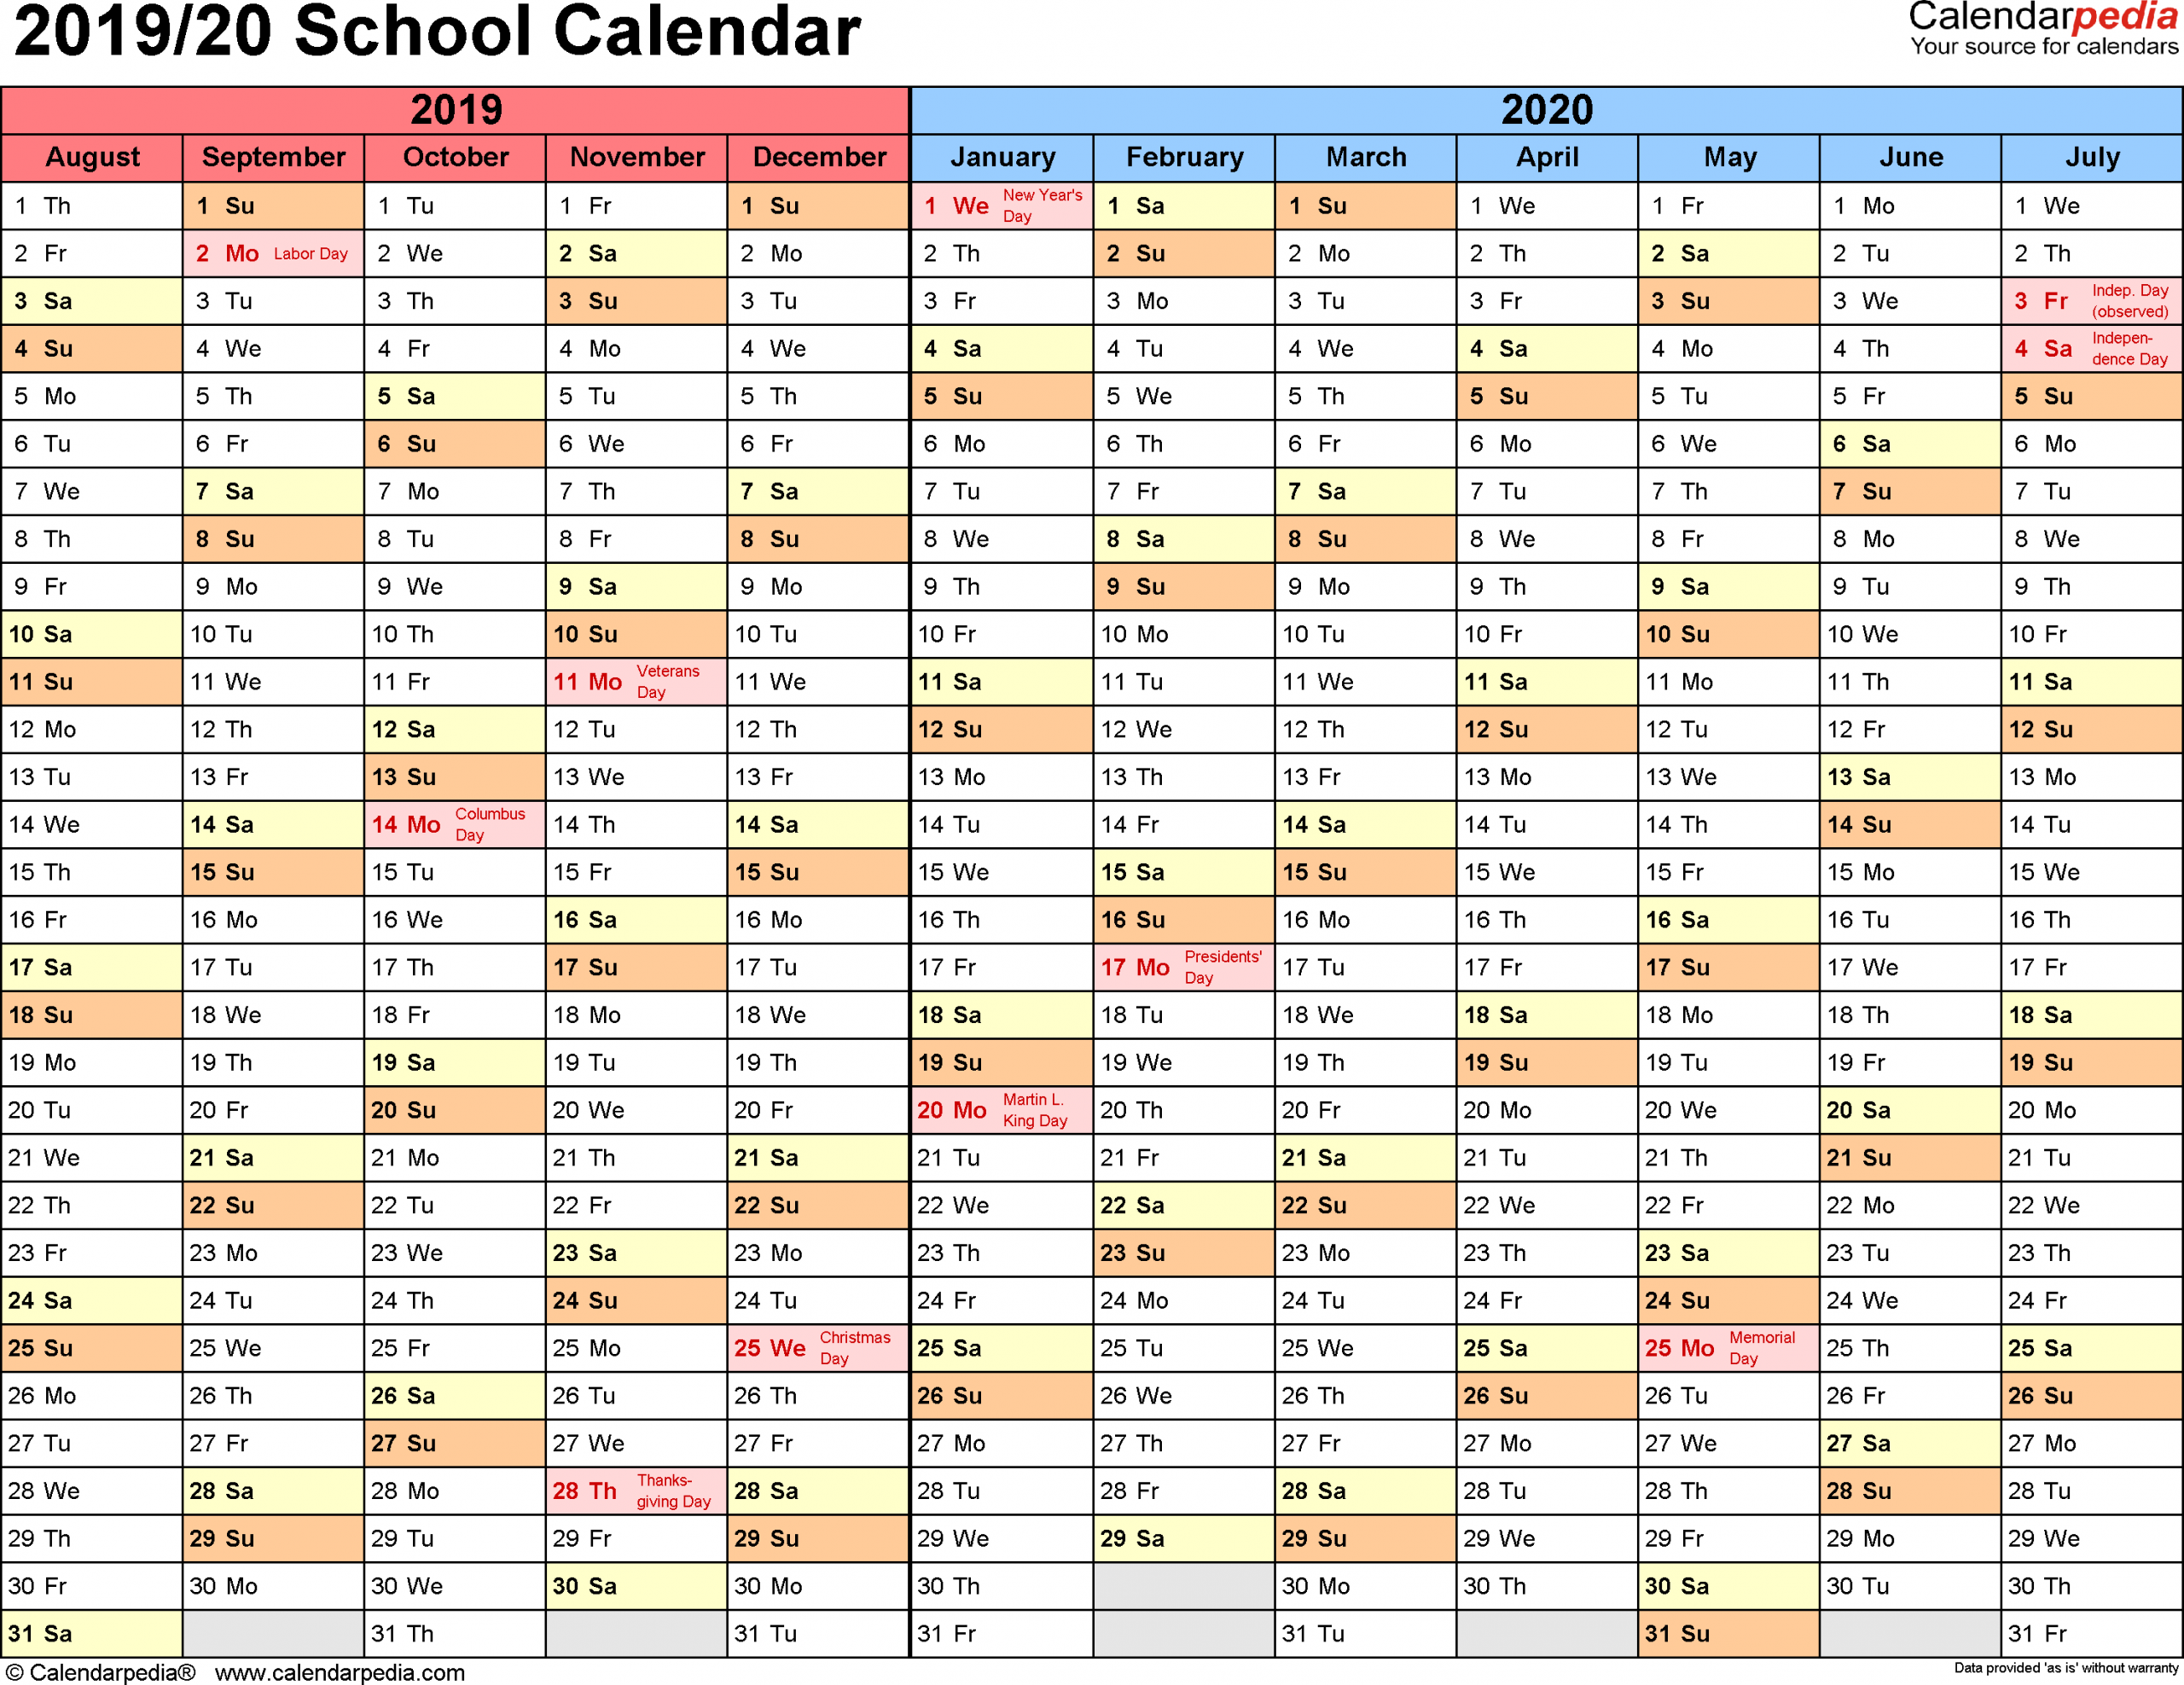 School Calendars 2019/2020 - Free Printable Word Templates